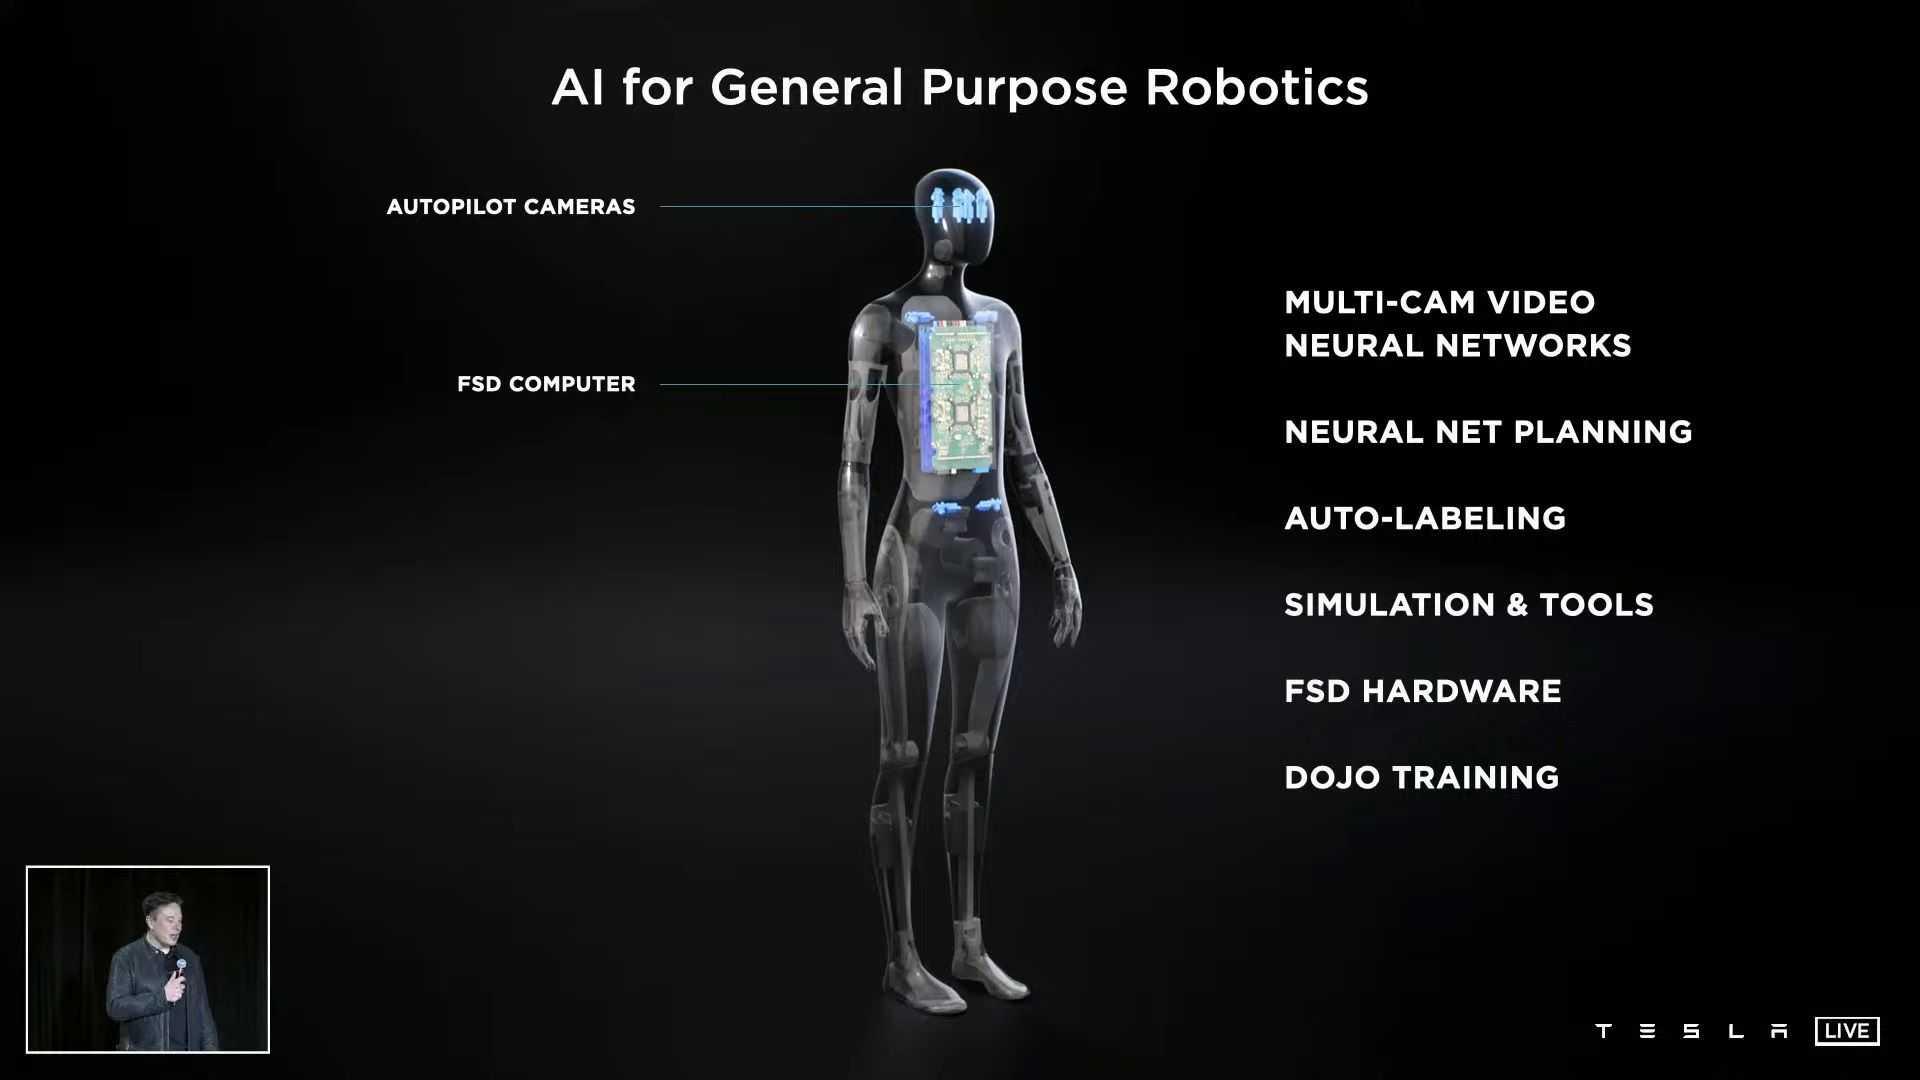 Tesla представила робота-помощника с ИИ